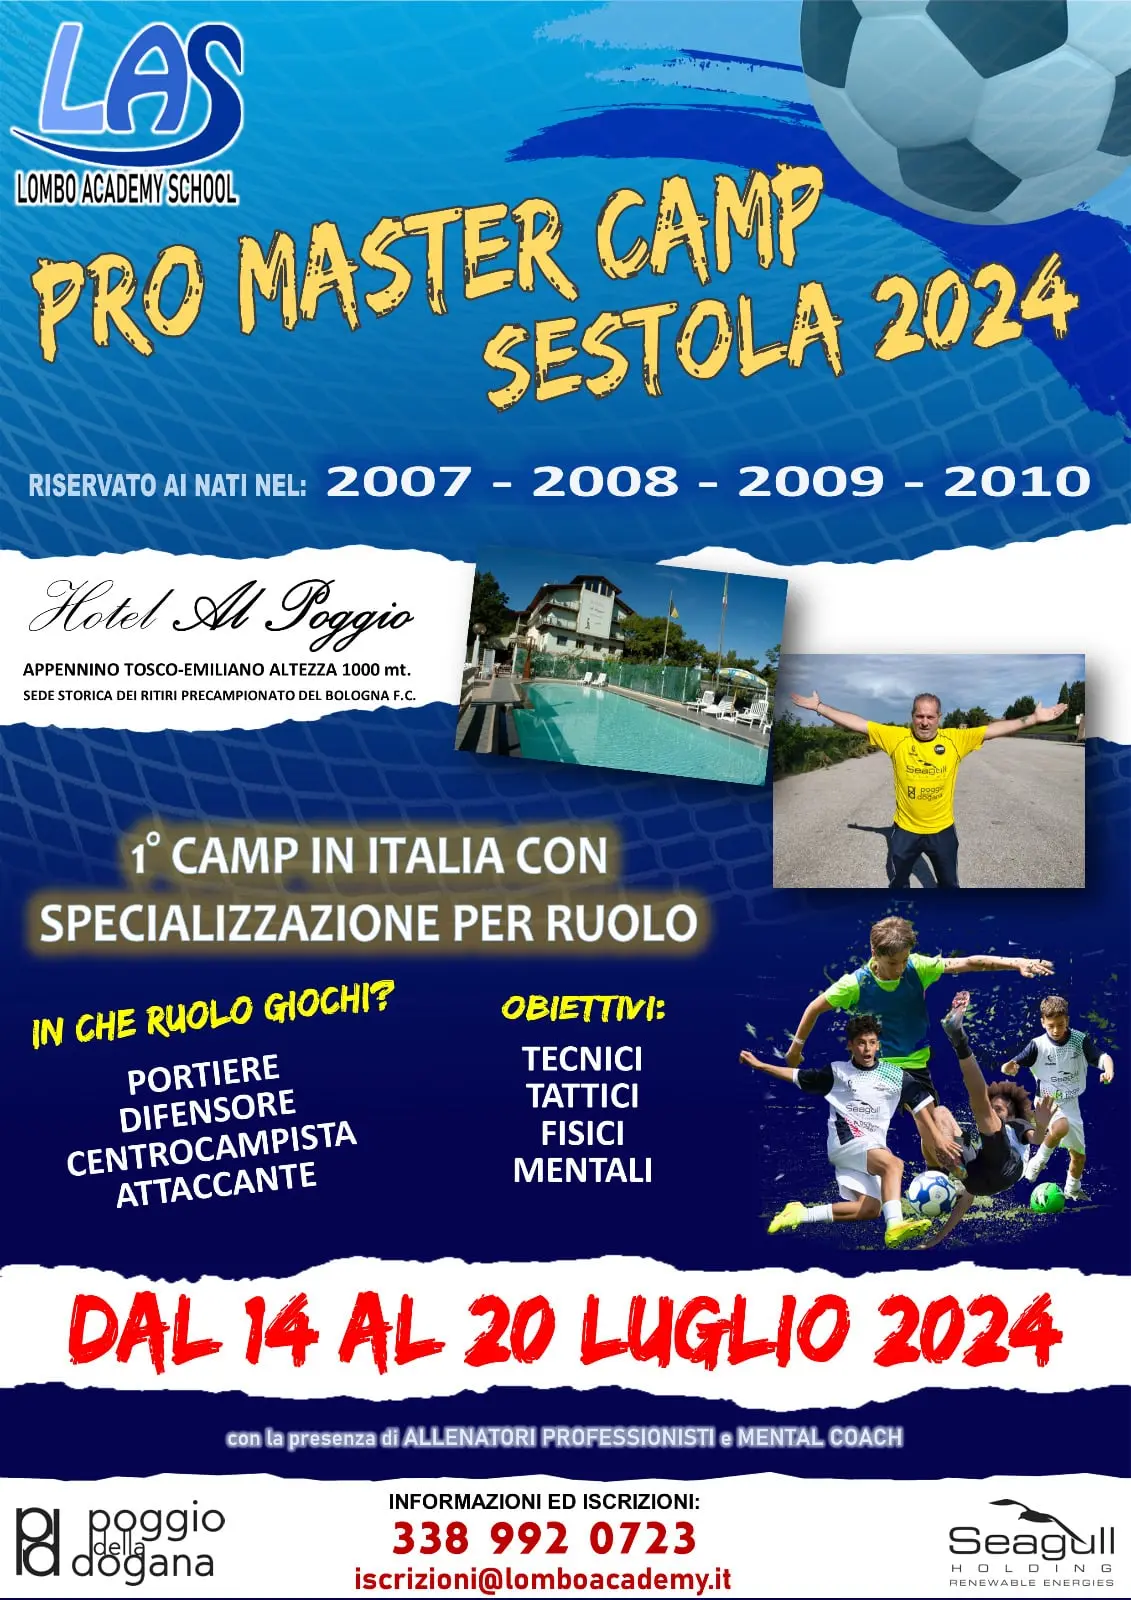 Pro master camp Sestola